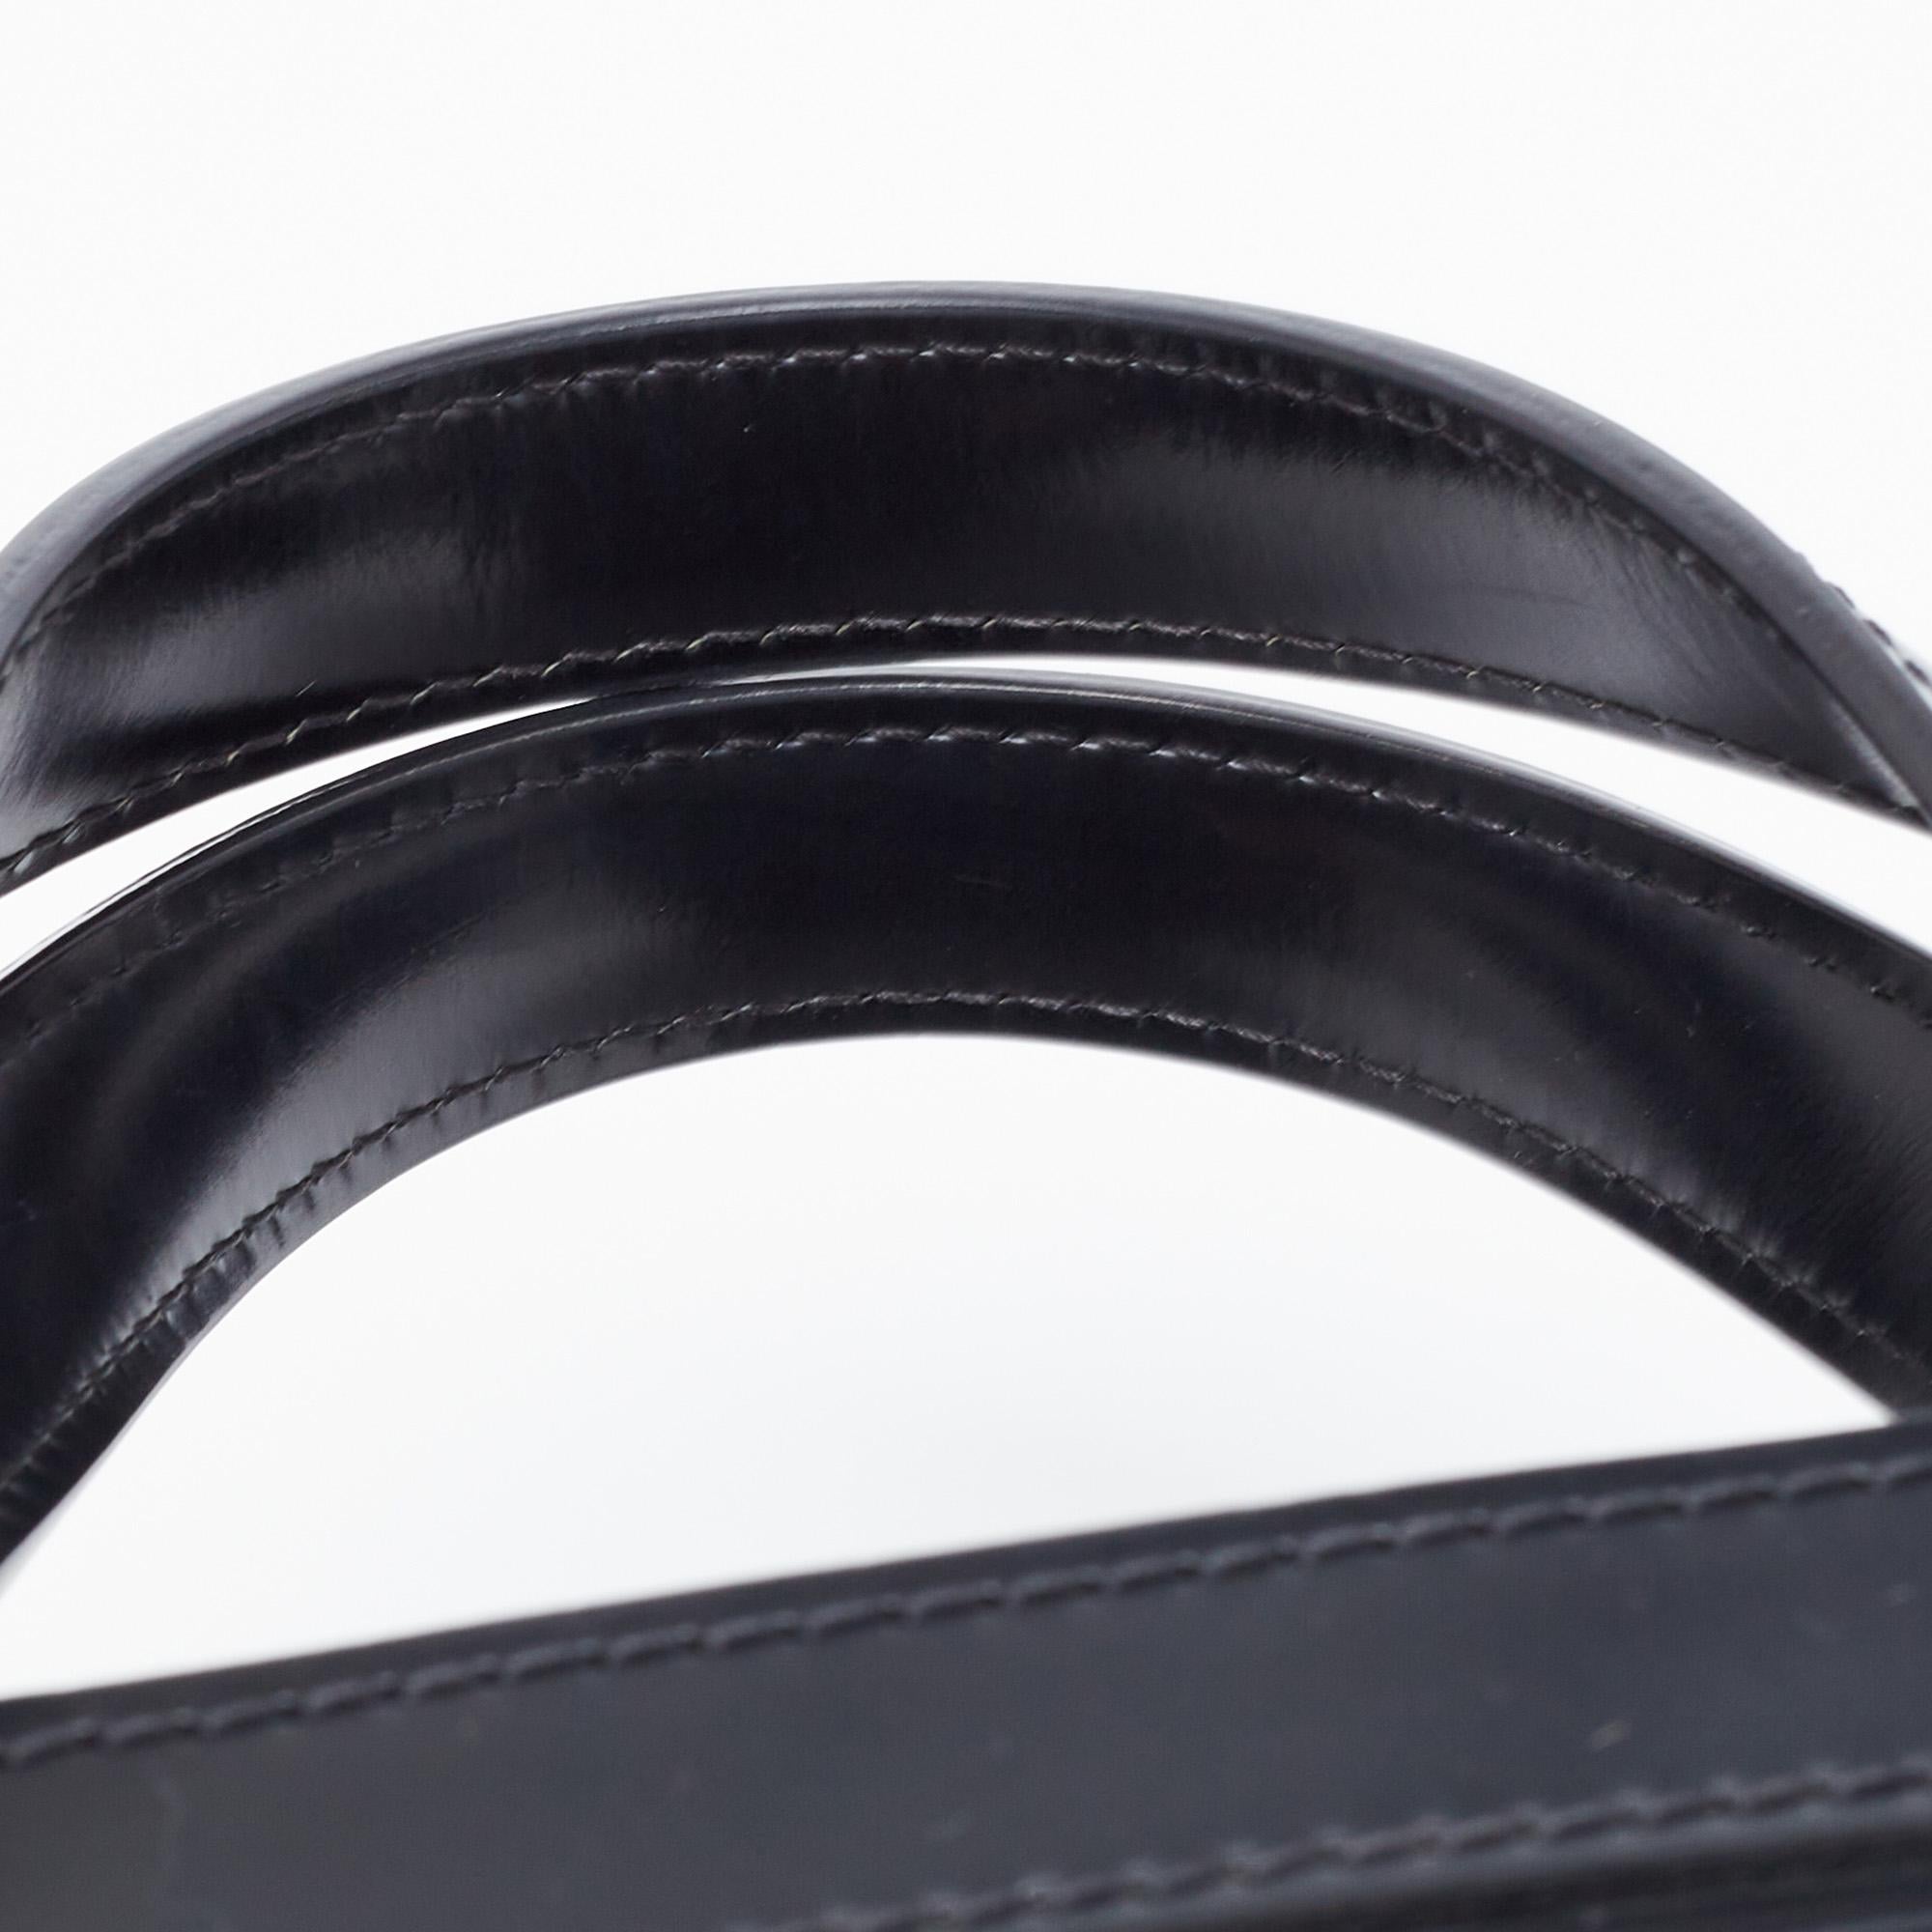 Louis Vuitton Black Epi Leather Brea GM Bag 8